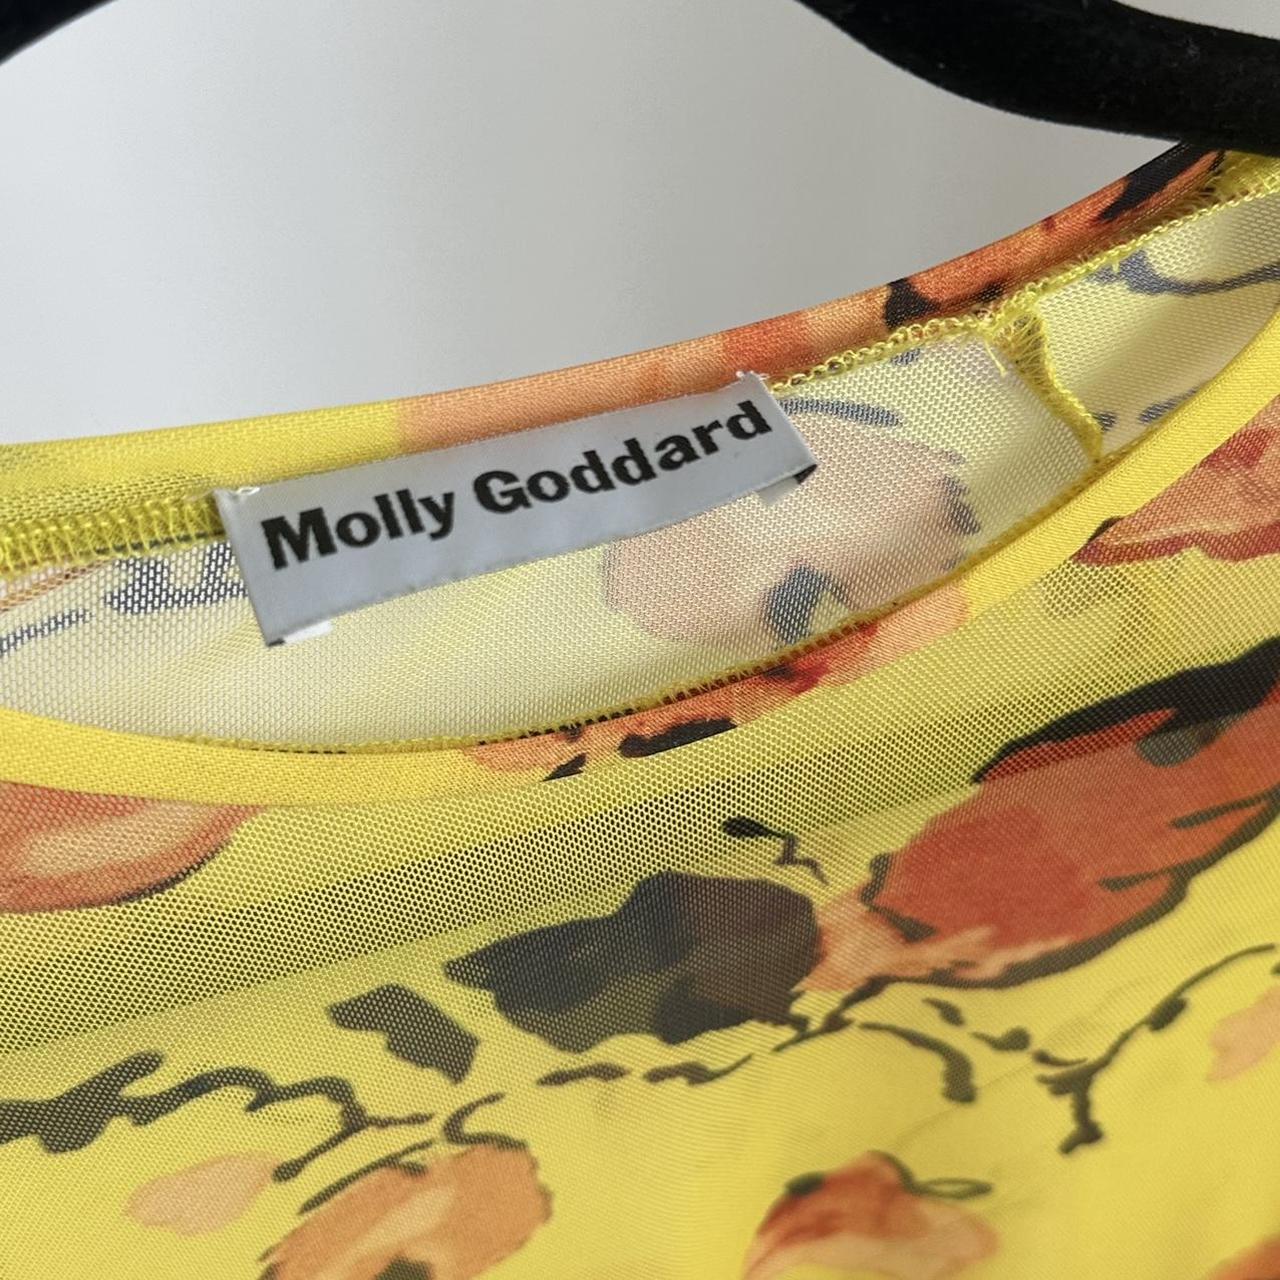 Molly Goddard sheer mesh yellow top long sleeve... - Depop